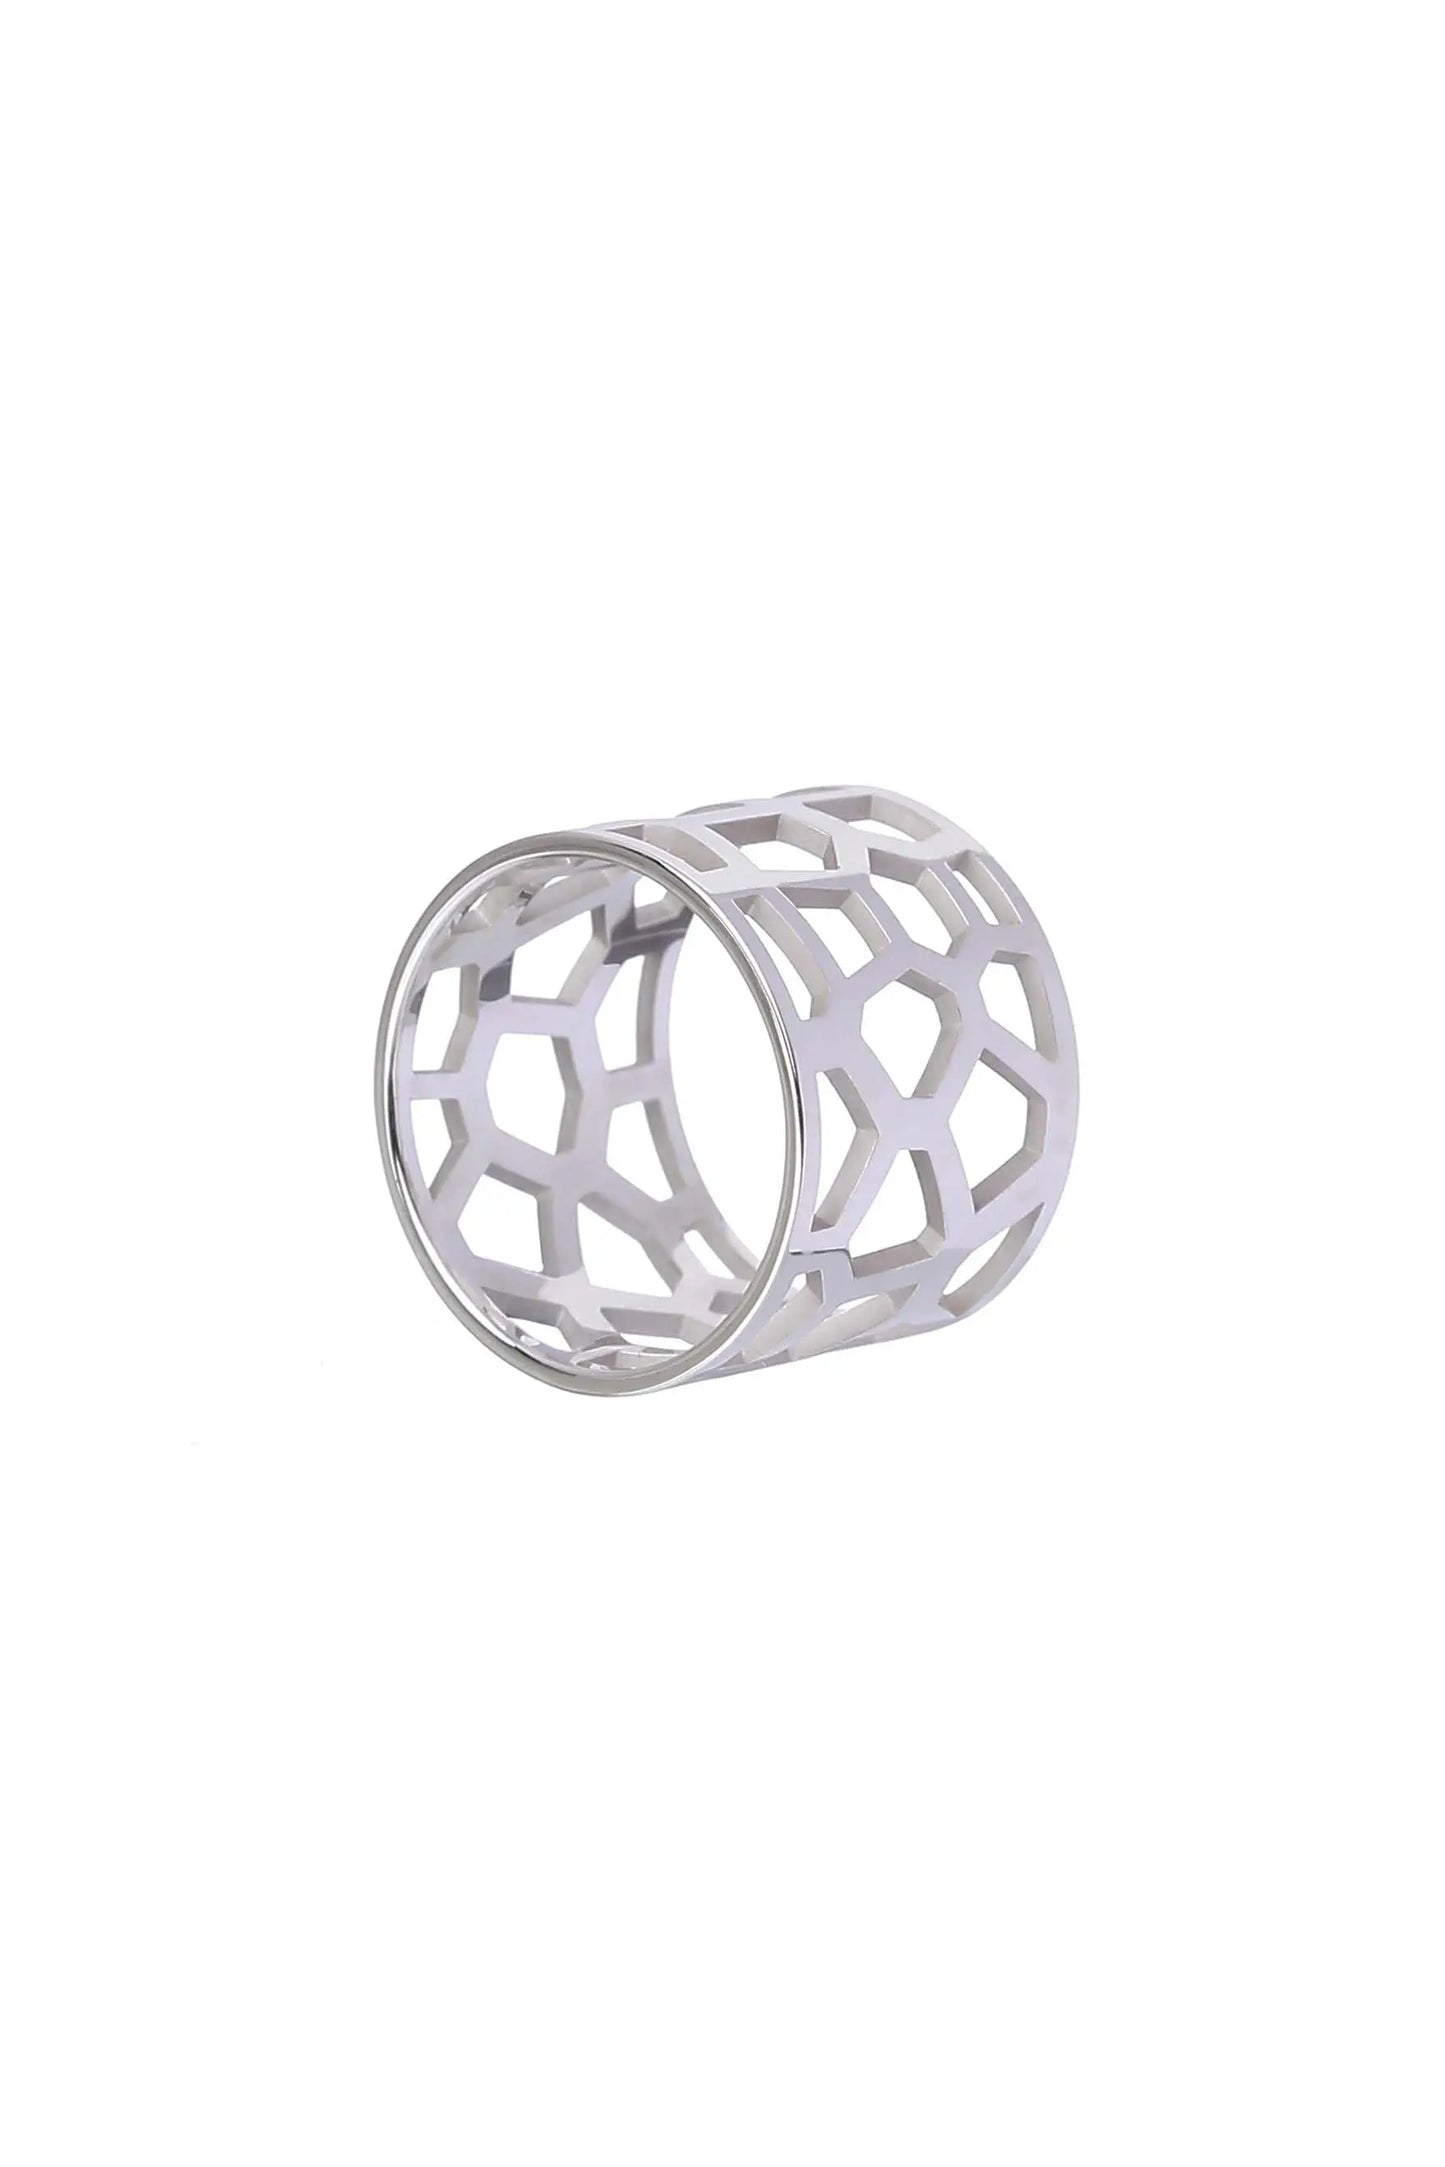 Single web tall ring - CDD Jewelry